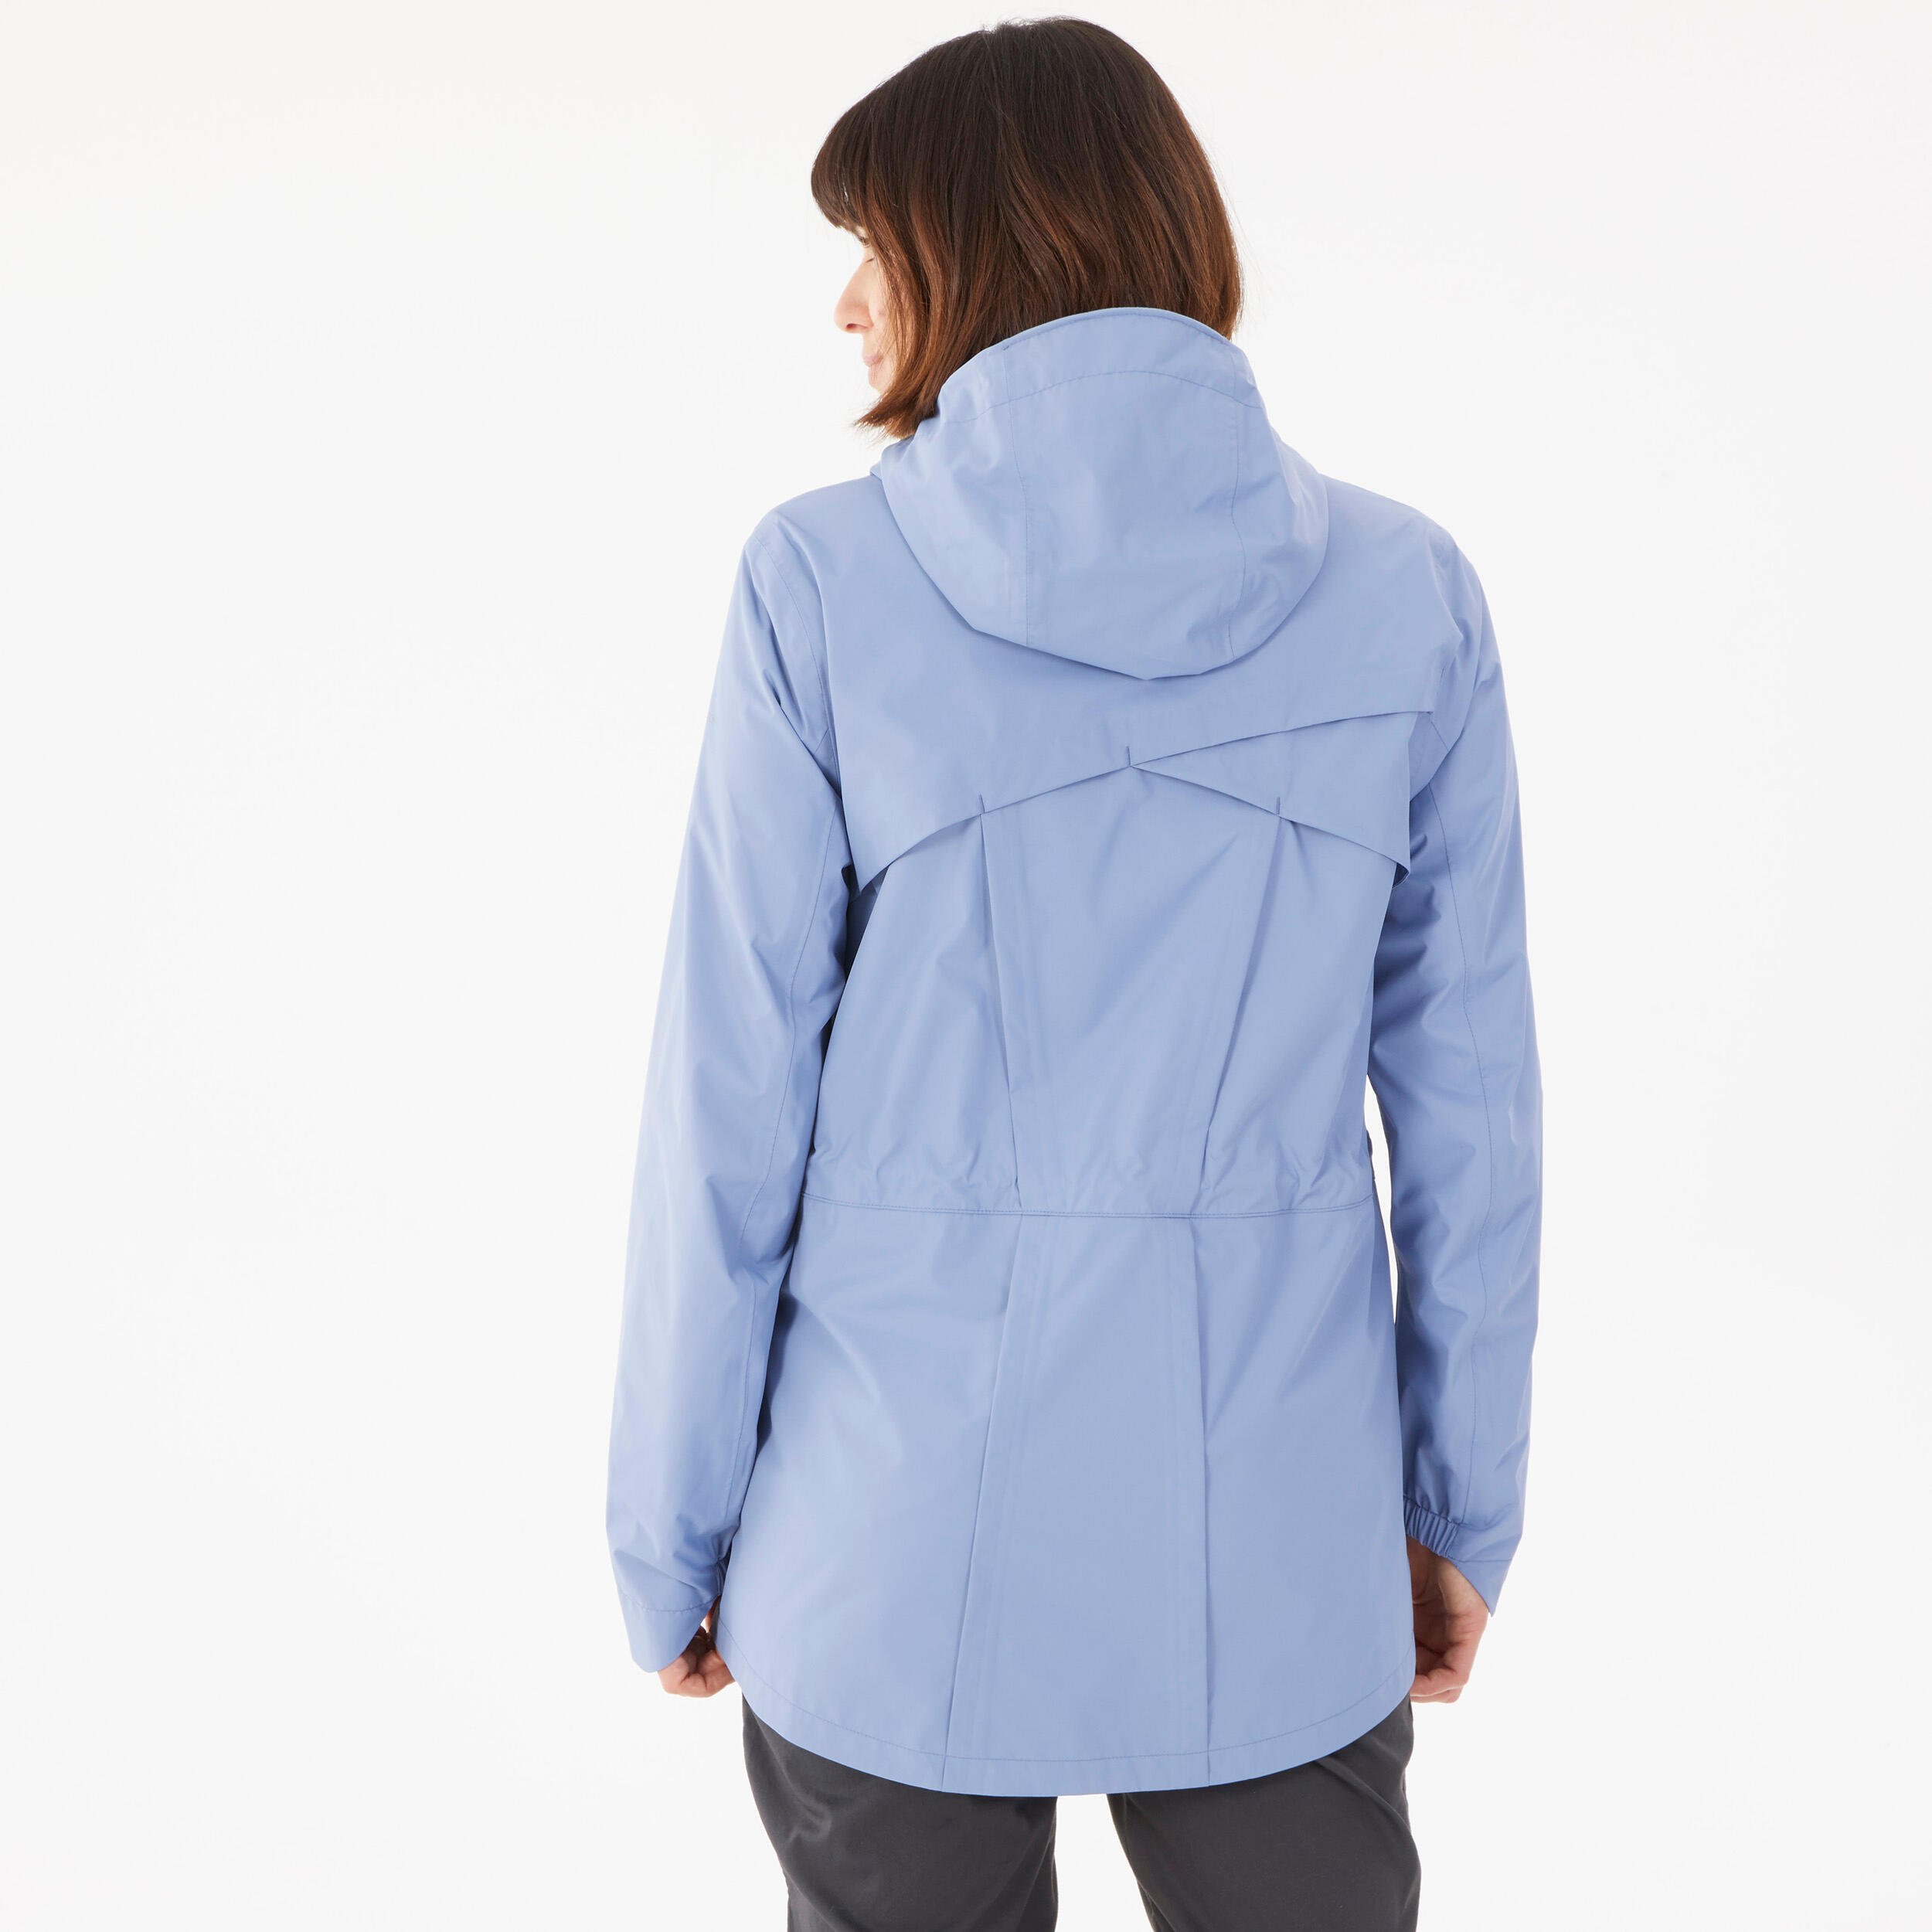 Hiking Raincoat - NH500 Waterproof Jacket - Women - Blue 4/9